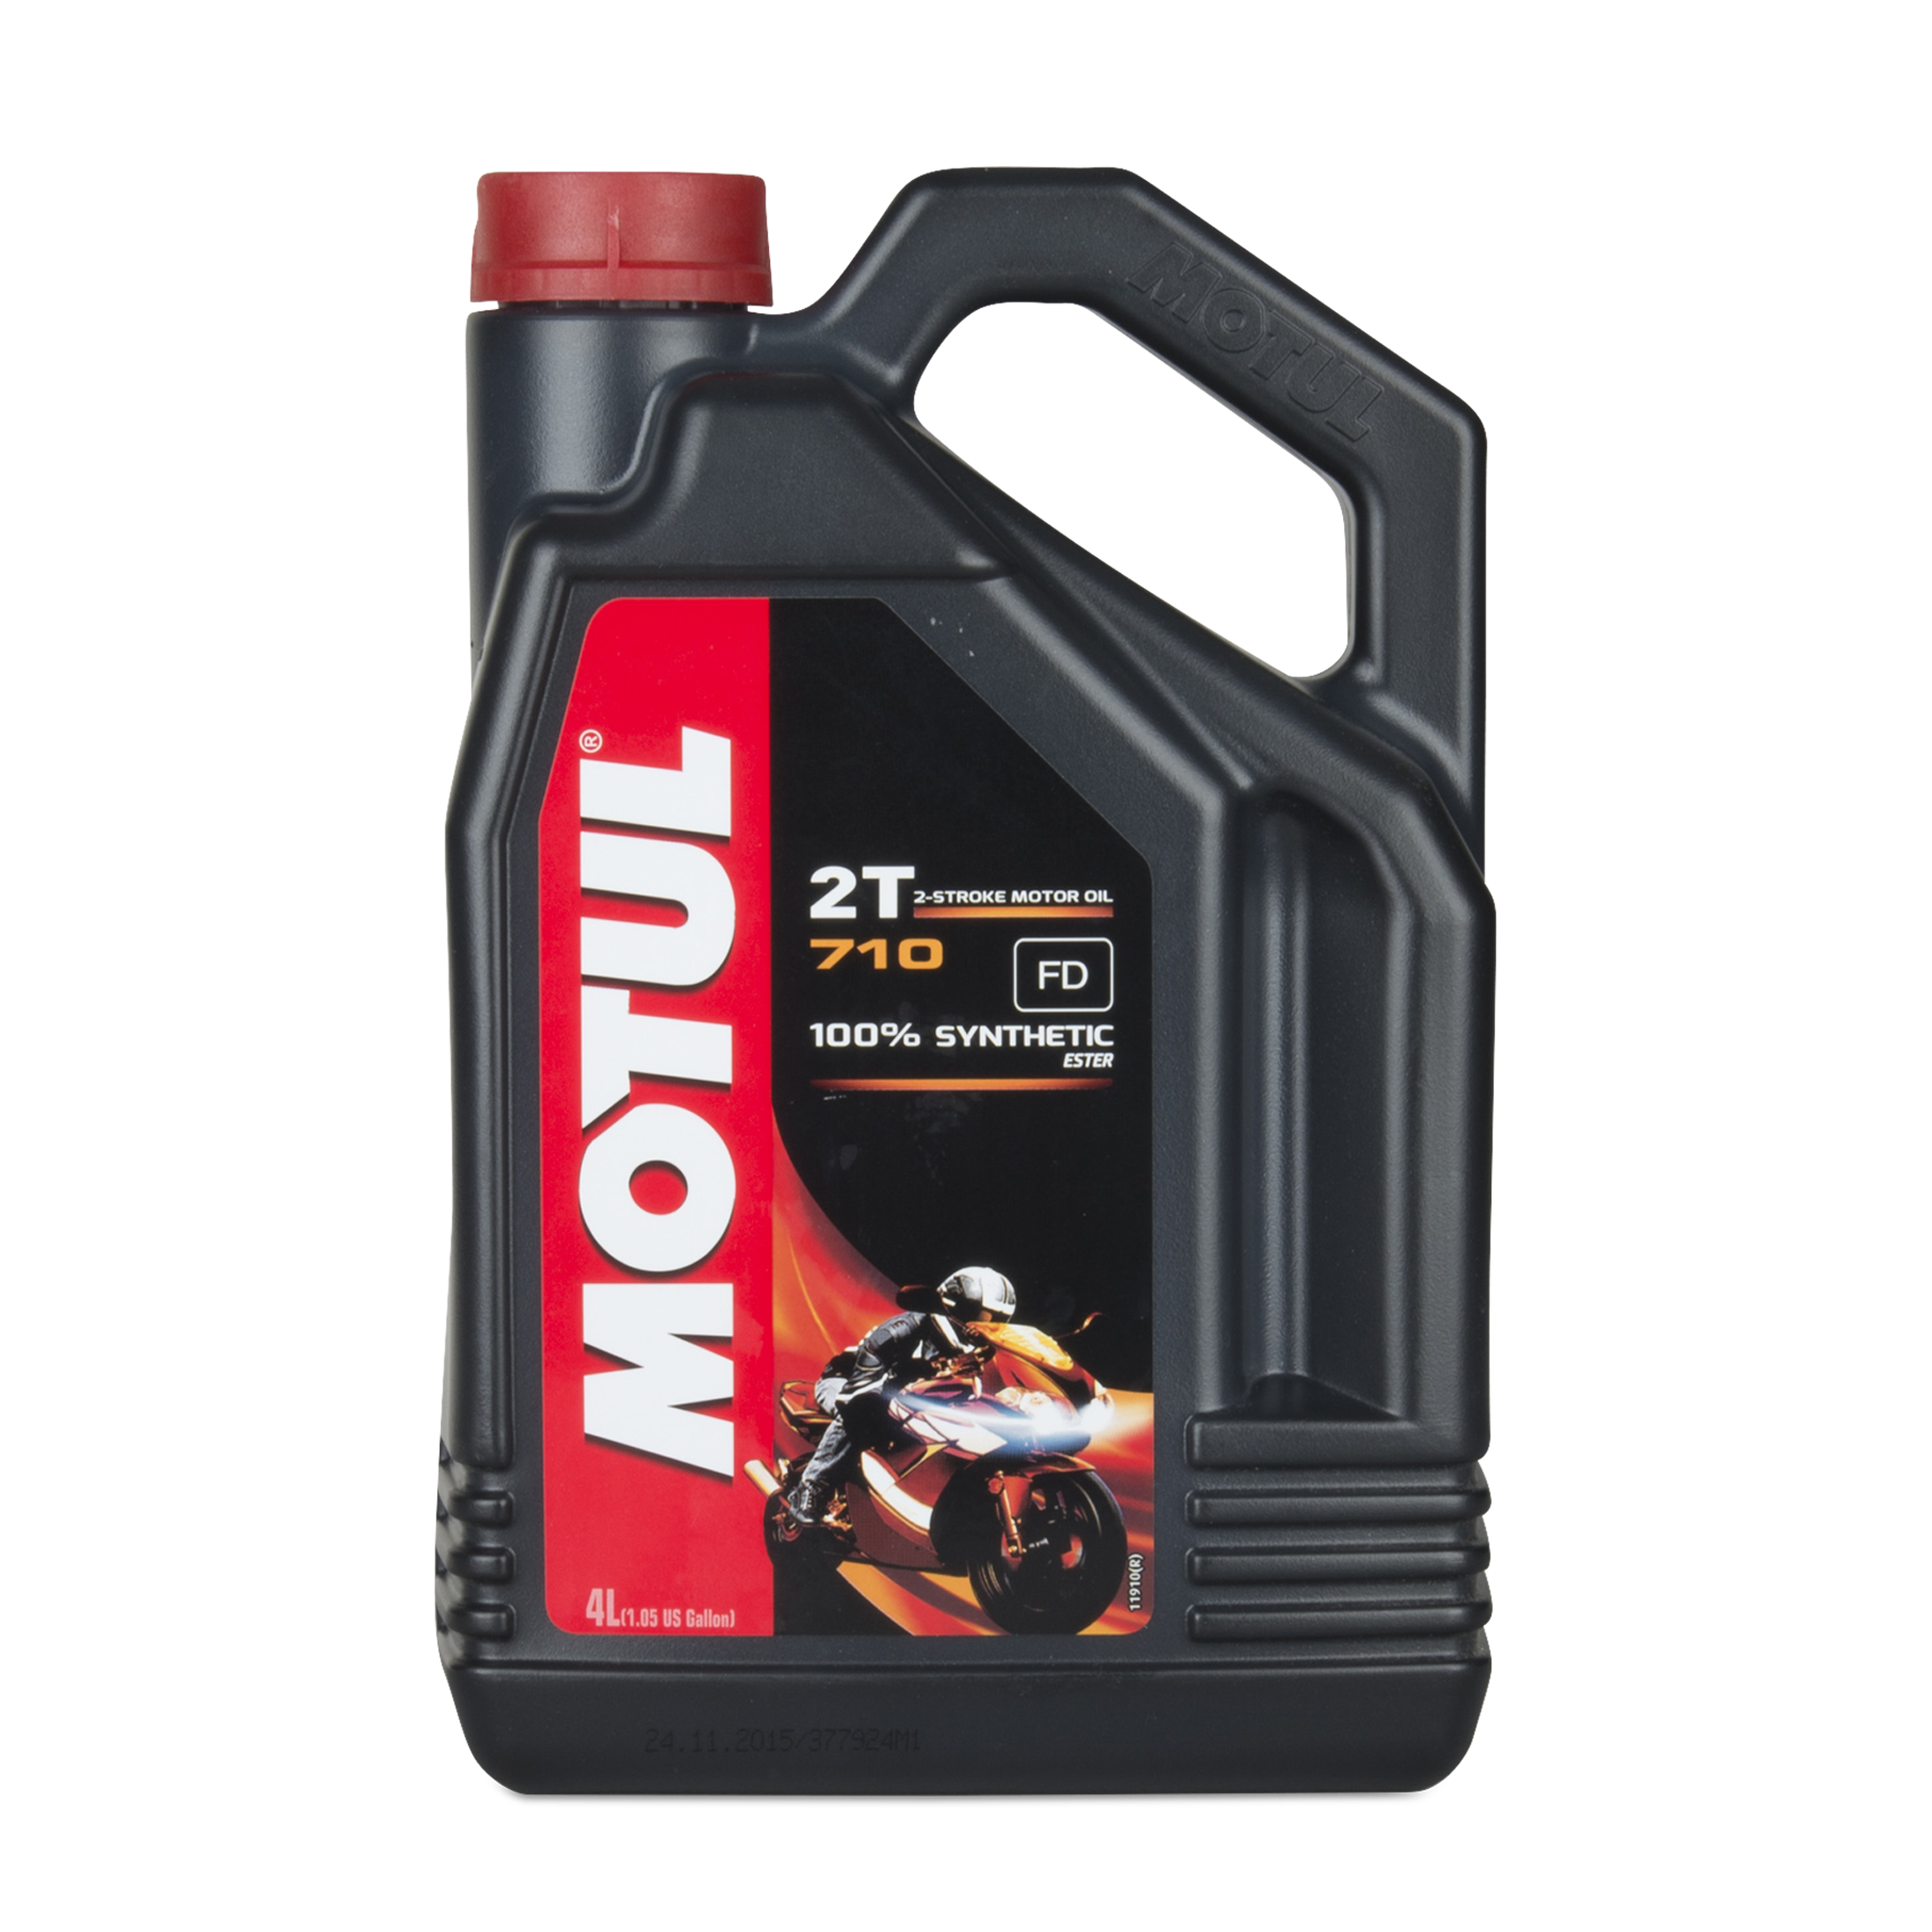 Motul 710 2T 4L Oil Fully synthetic - Now 21% Savings